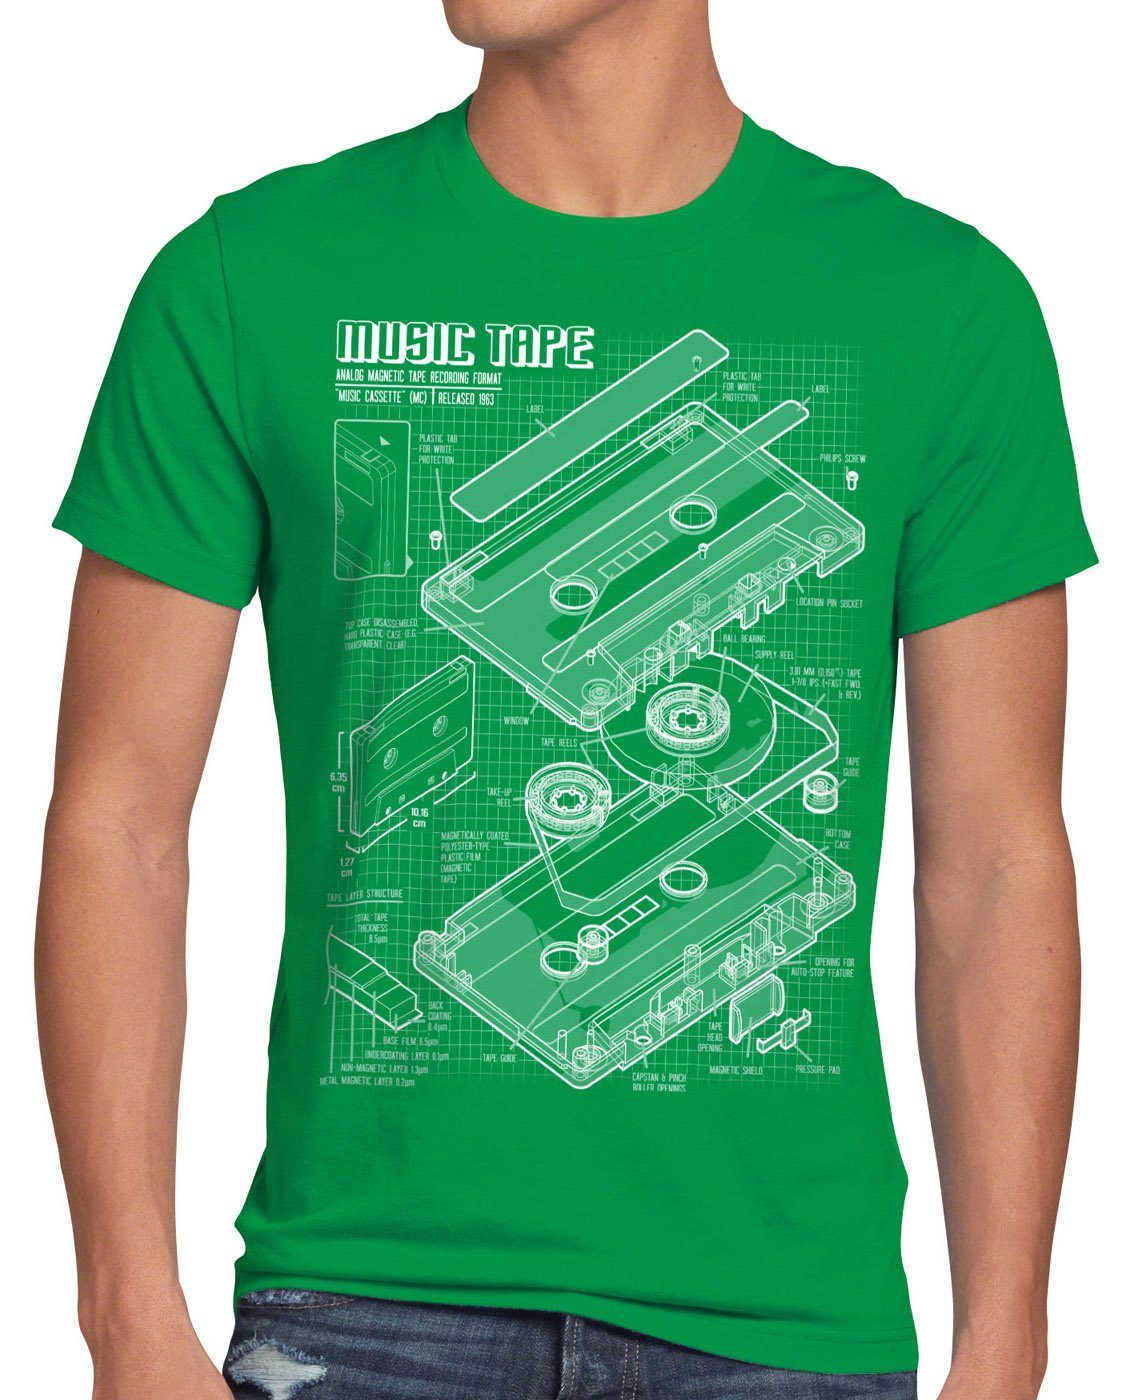 disko TAPE musik Kassette Herren Print-Shirt turntable T-Shirt disco style3 ndw grün retro analog MC DJ